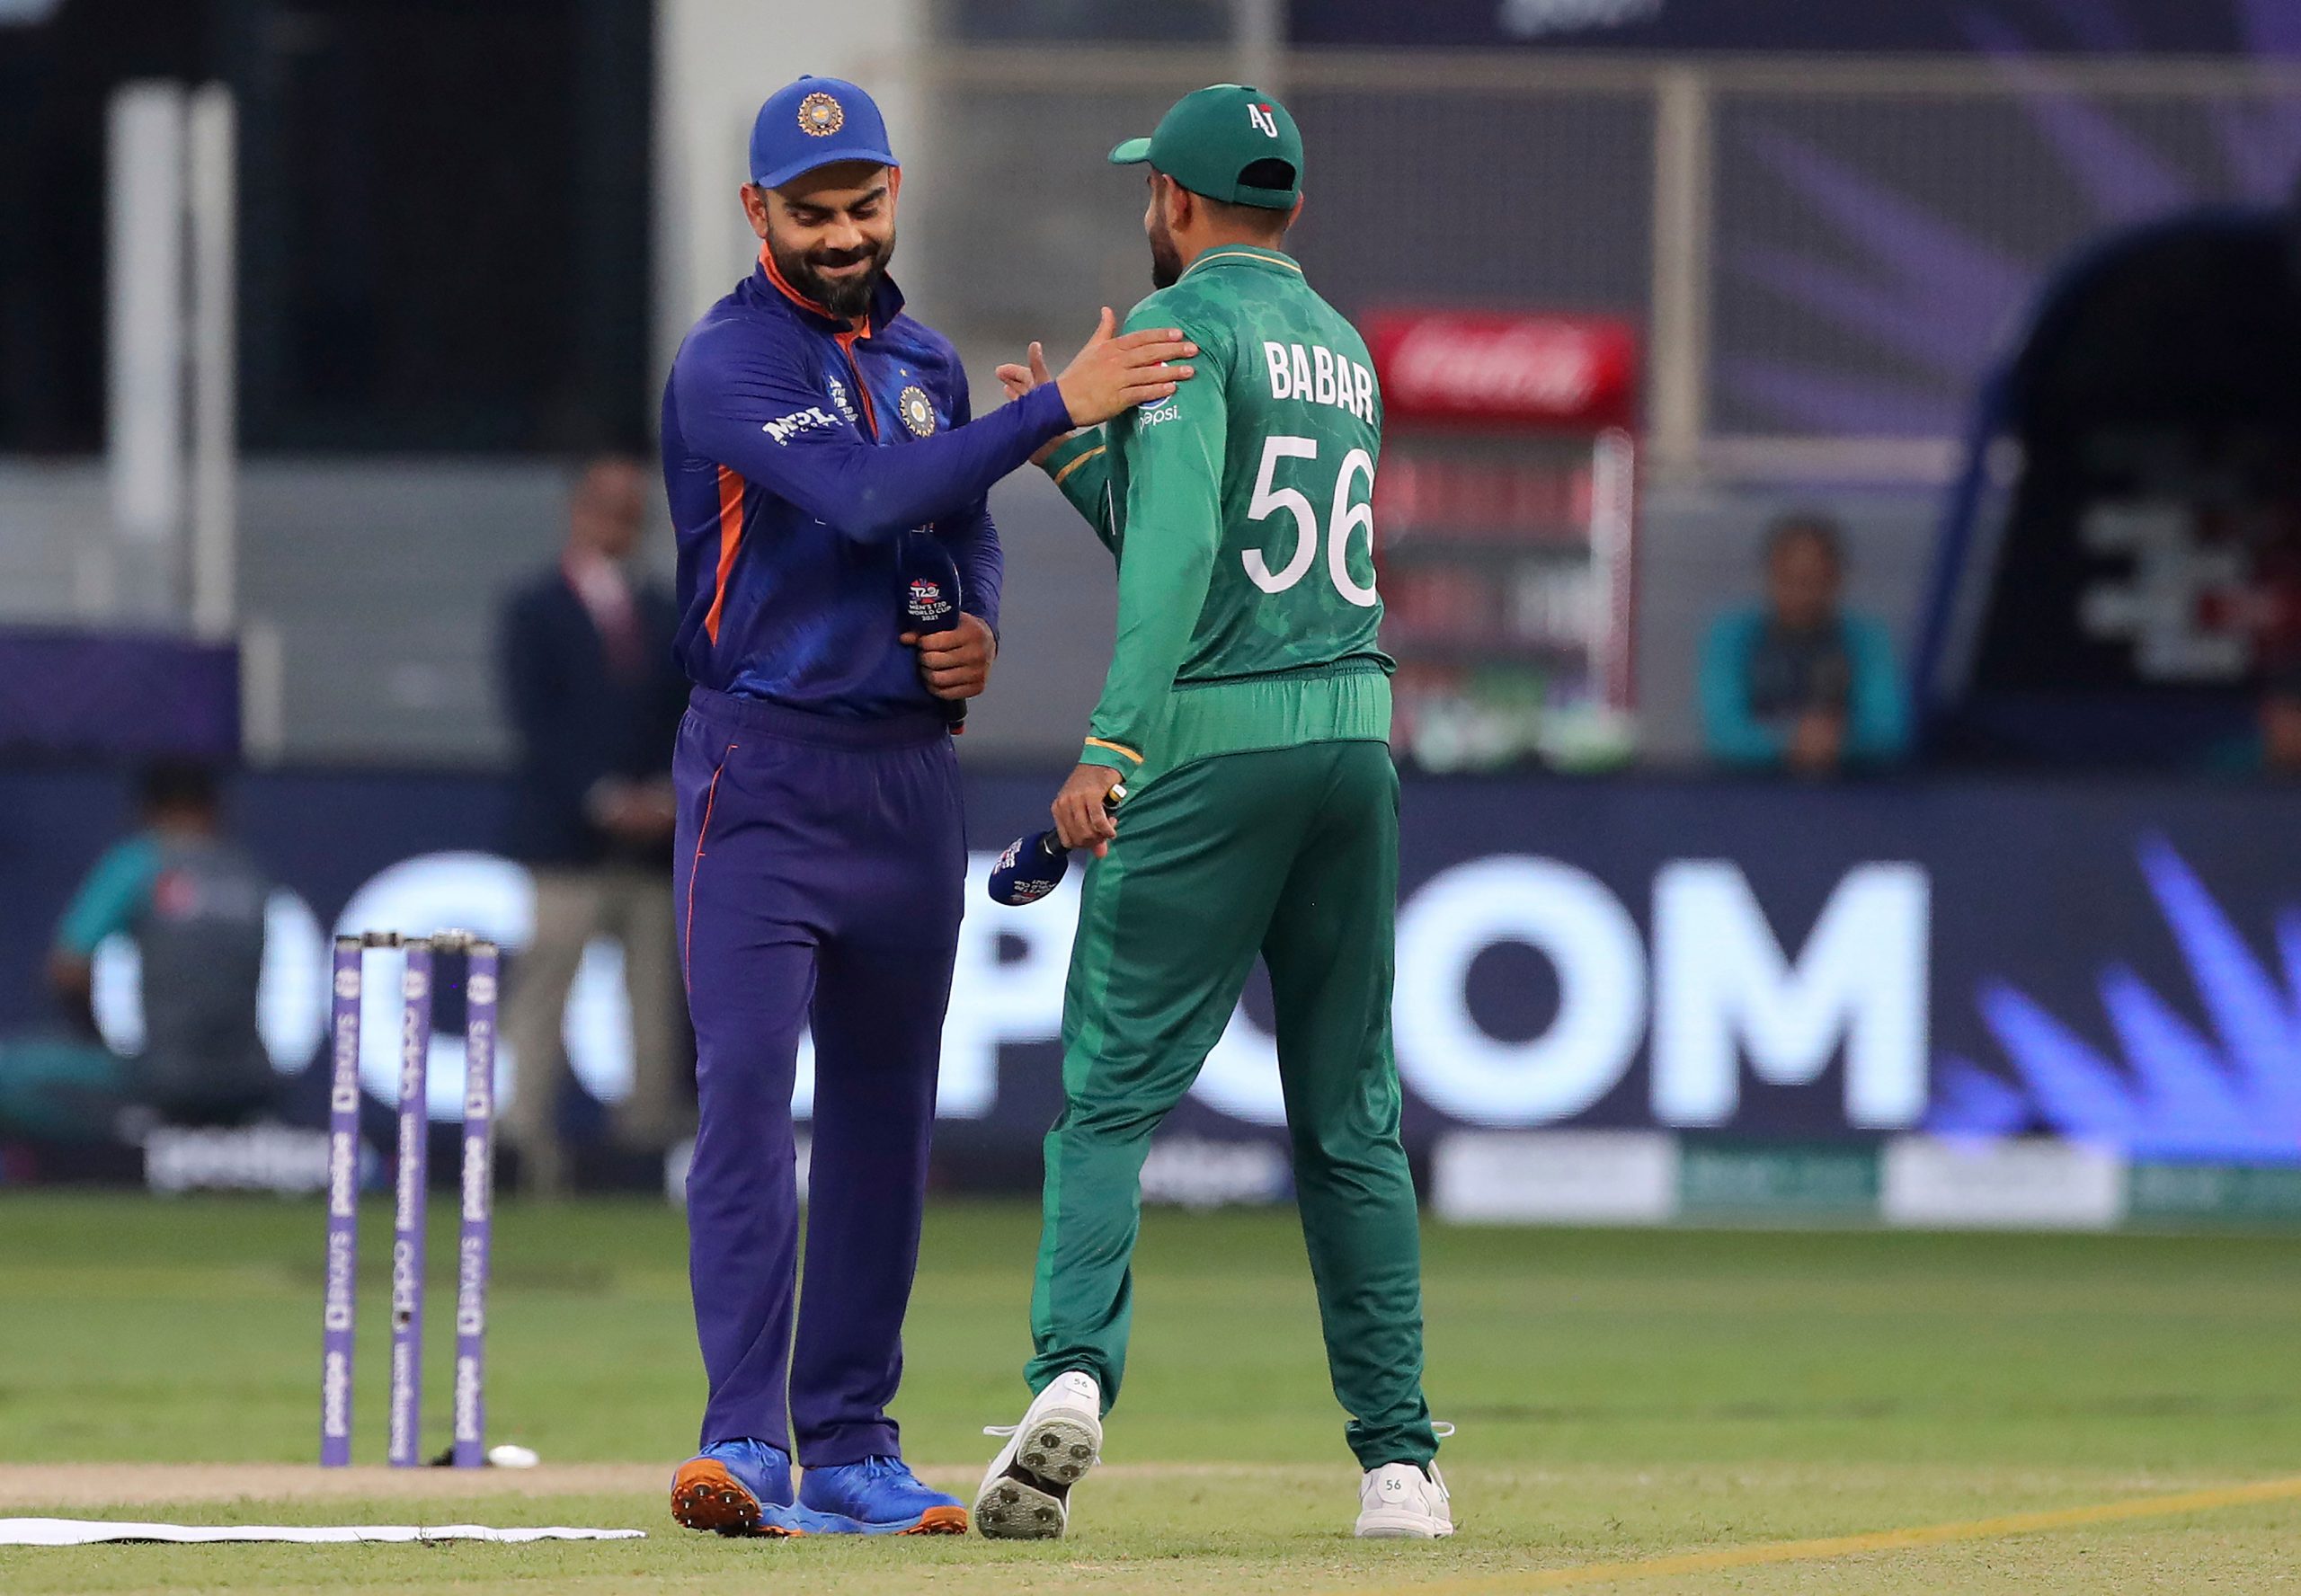 Hope cricket can help improve relationships between India, Pakistan: ICC chair